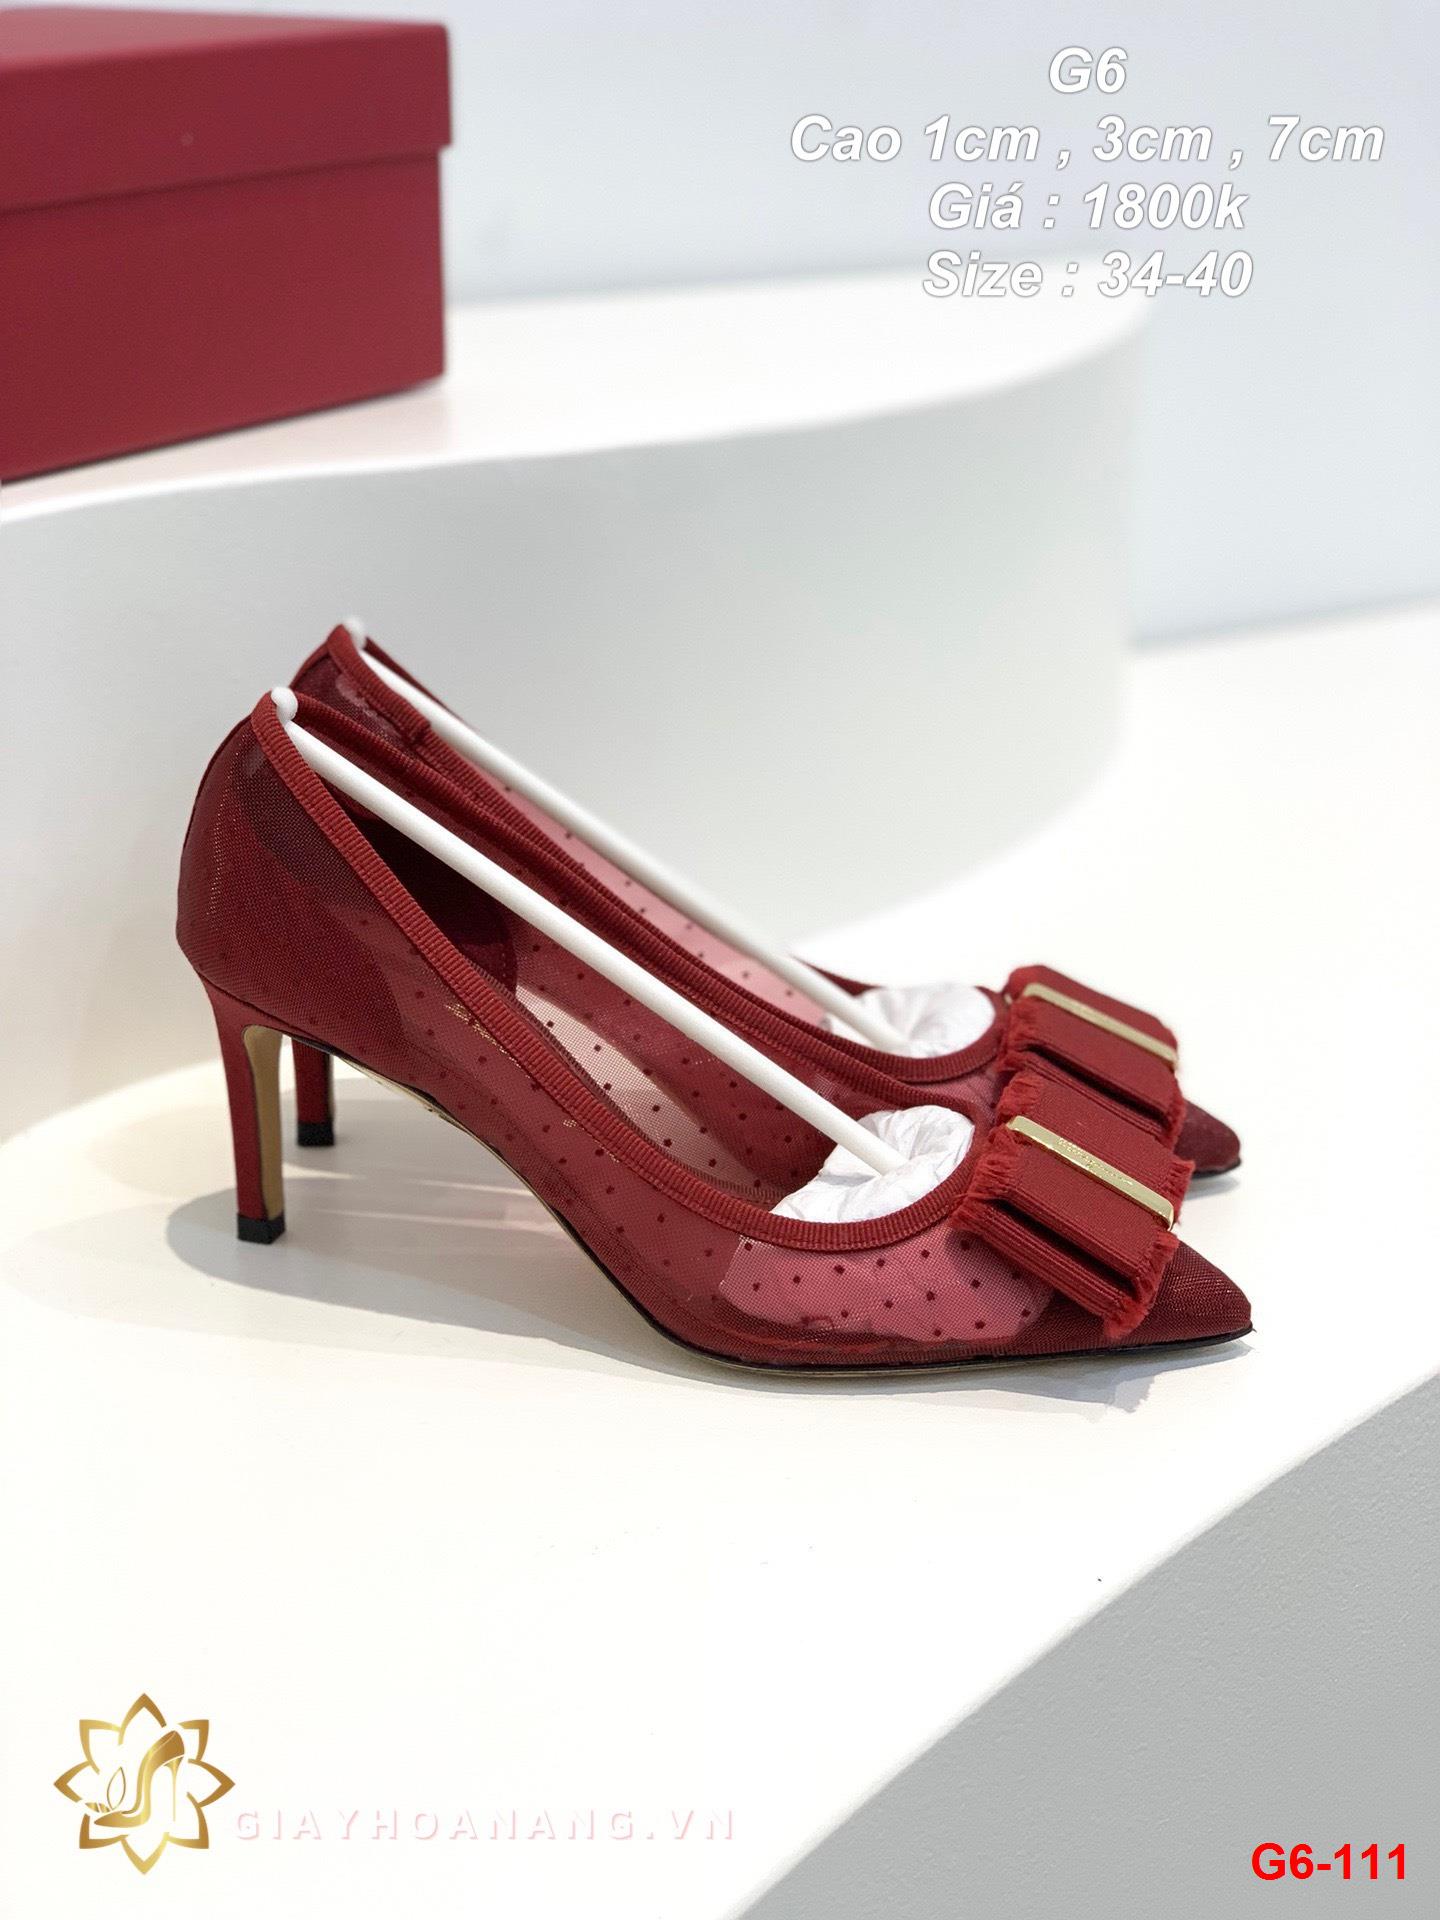 G6-111 Salvatore Ferragamo giày cao 1cm , 3cm , 7cm siêu cấp